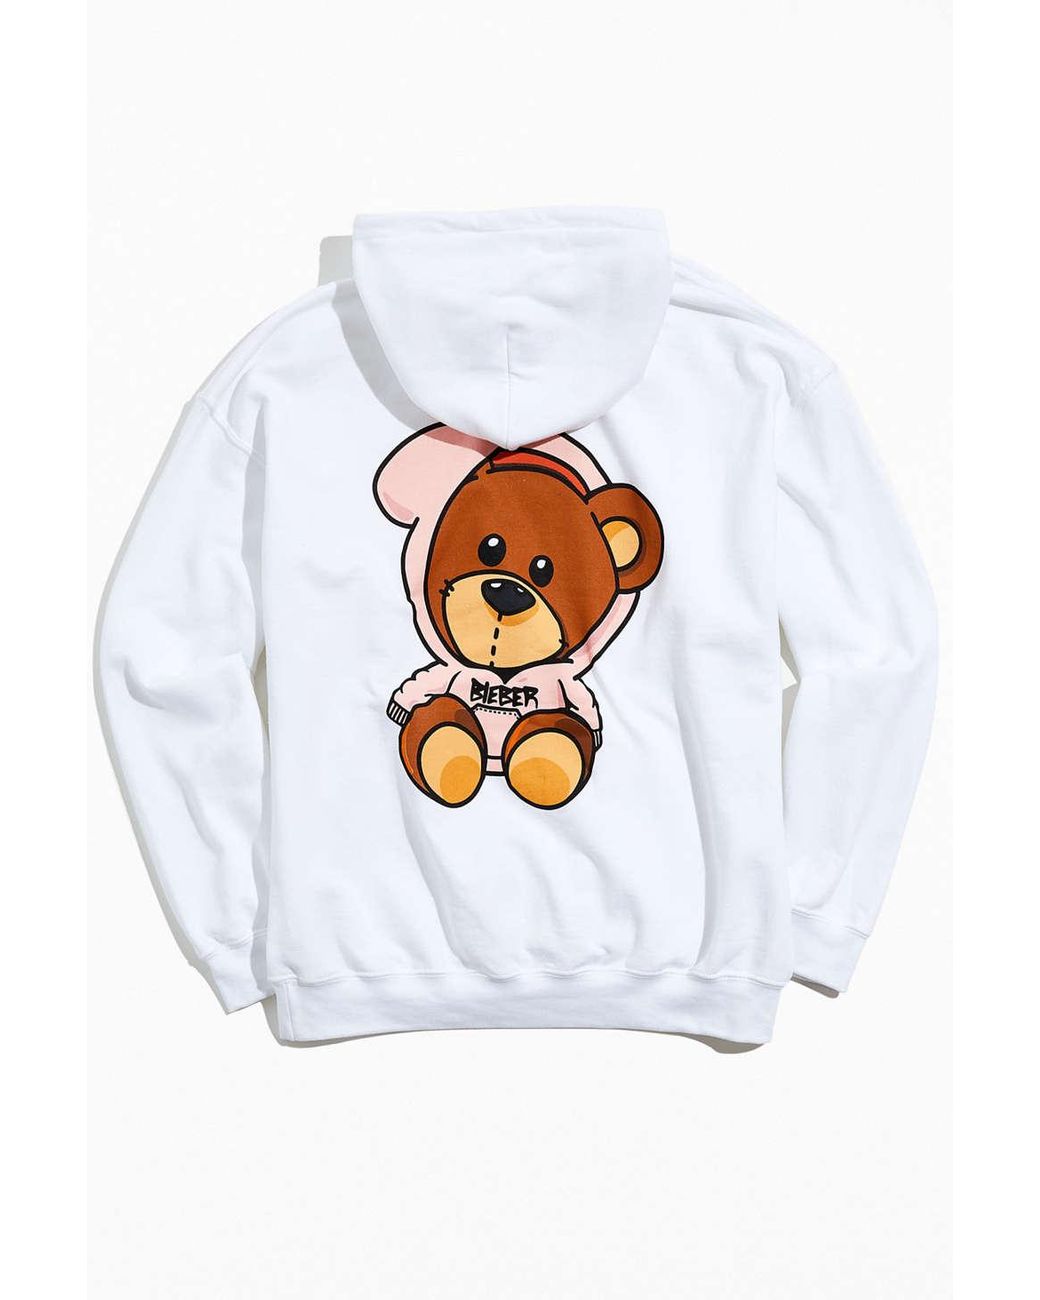 https://cdna.lystit.com/1040/1300/n/photos/urbanoutfitters/77d2d748/urban-outfitters-designer-White-Justin-Bieber-Uo-Exclusive-Teddy-Bear-Hoodie-Sweatshirt.jpeg